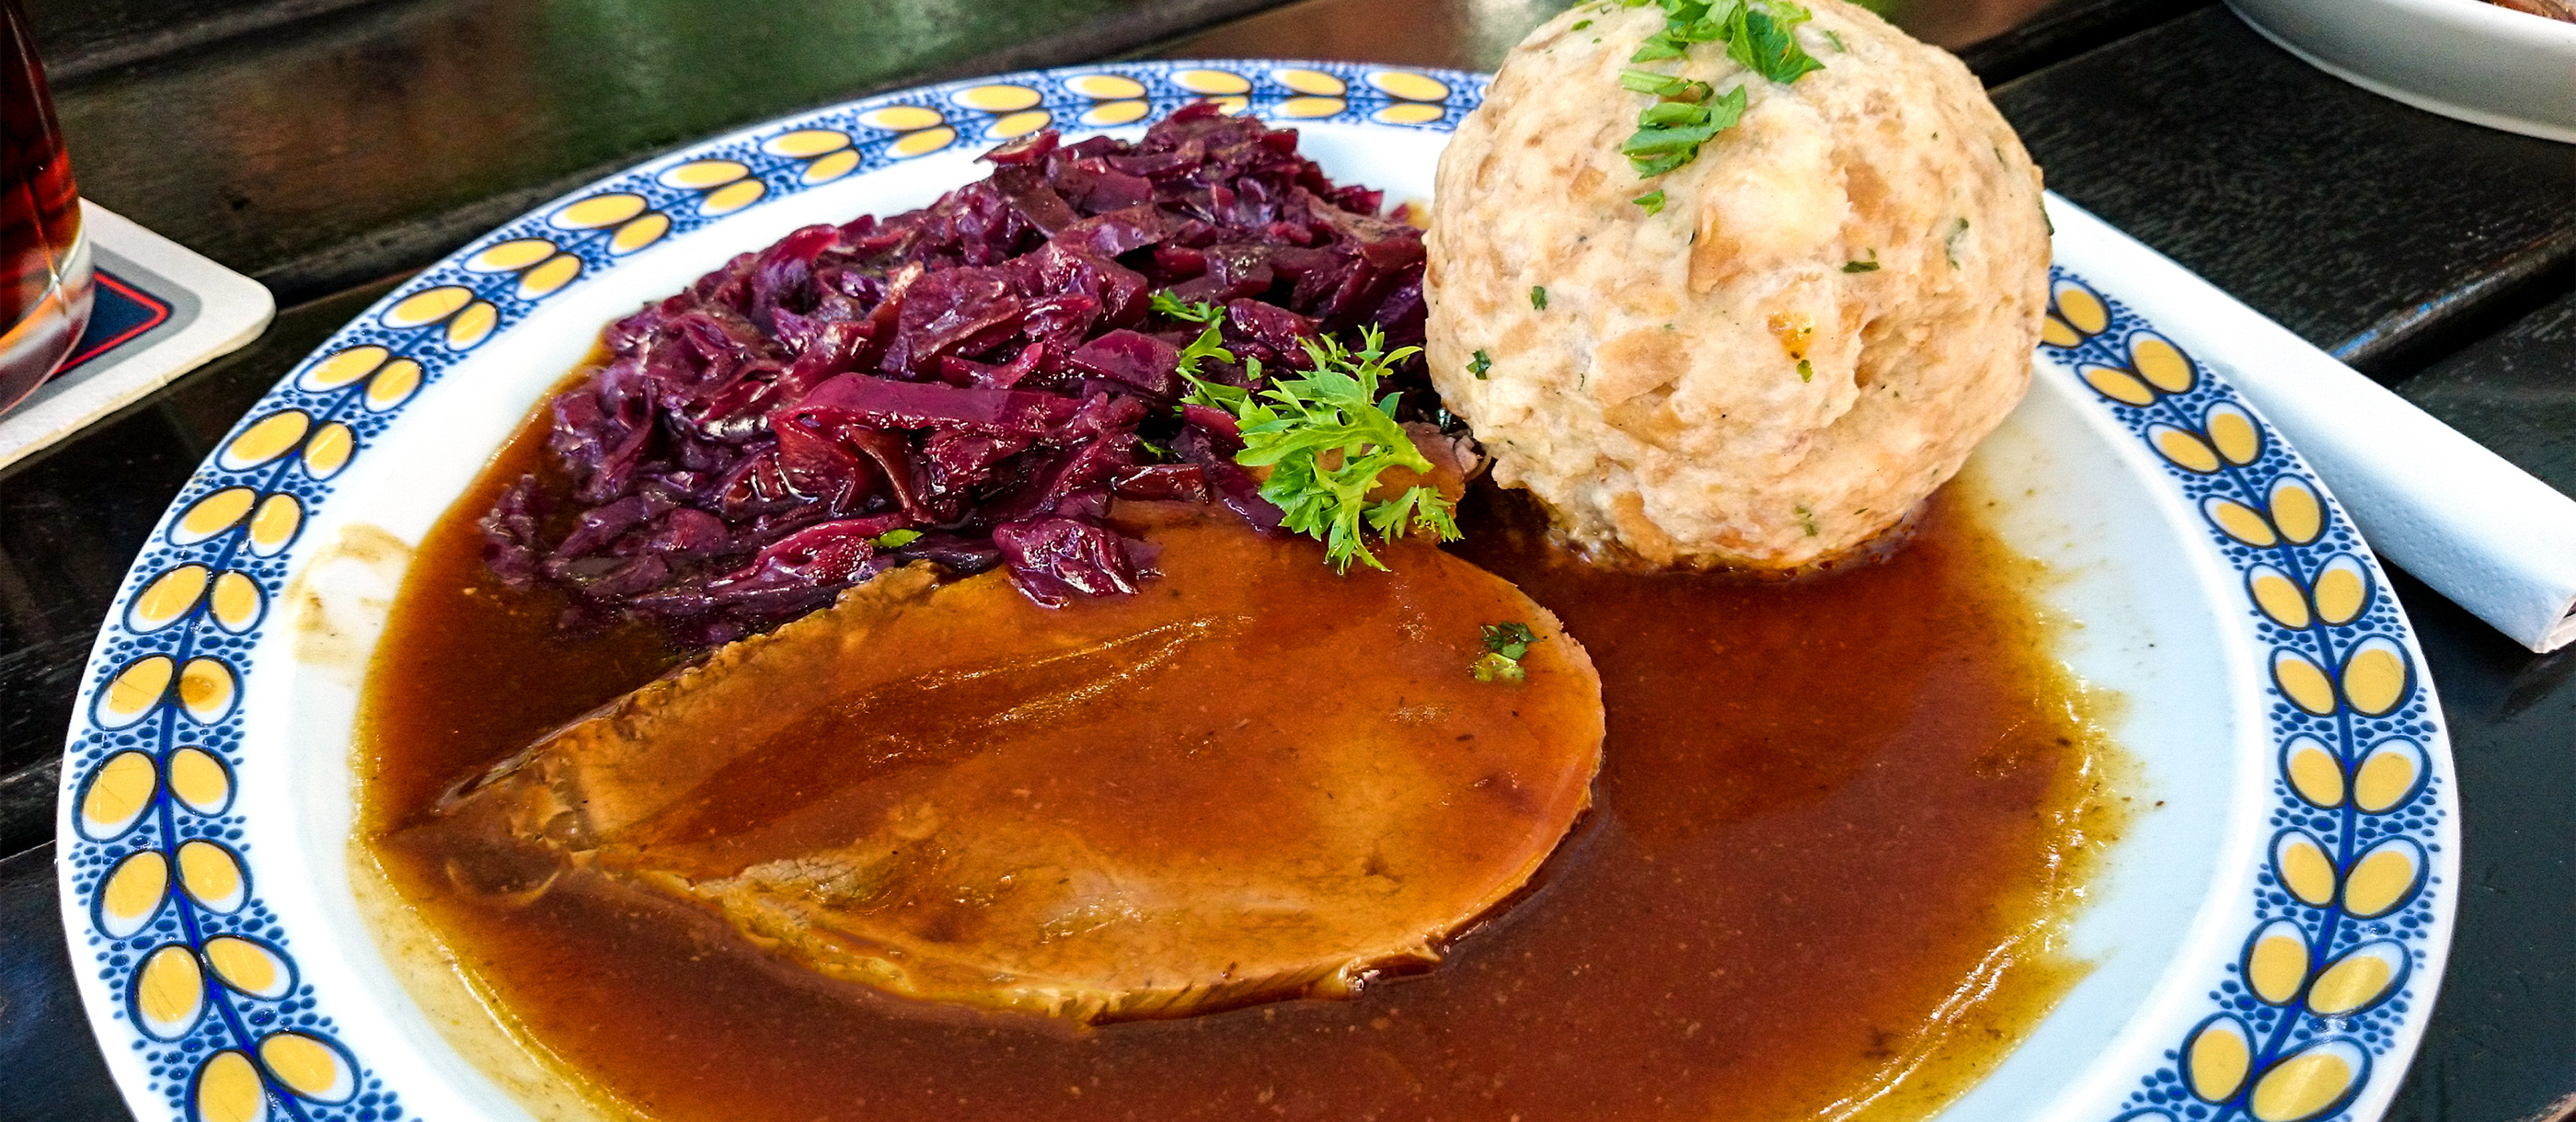 sauerbraten gravy recipe